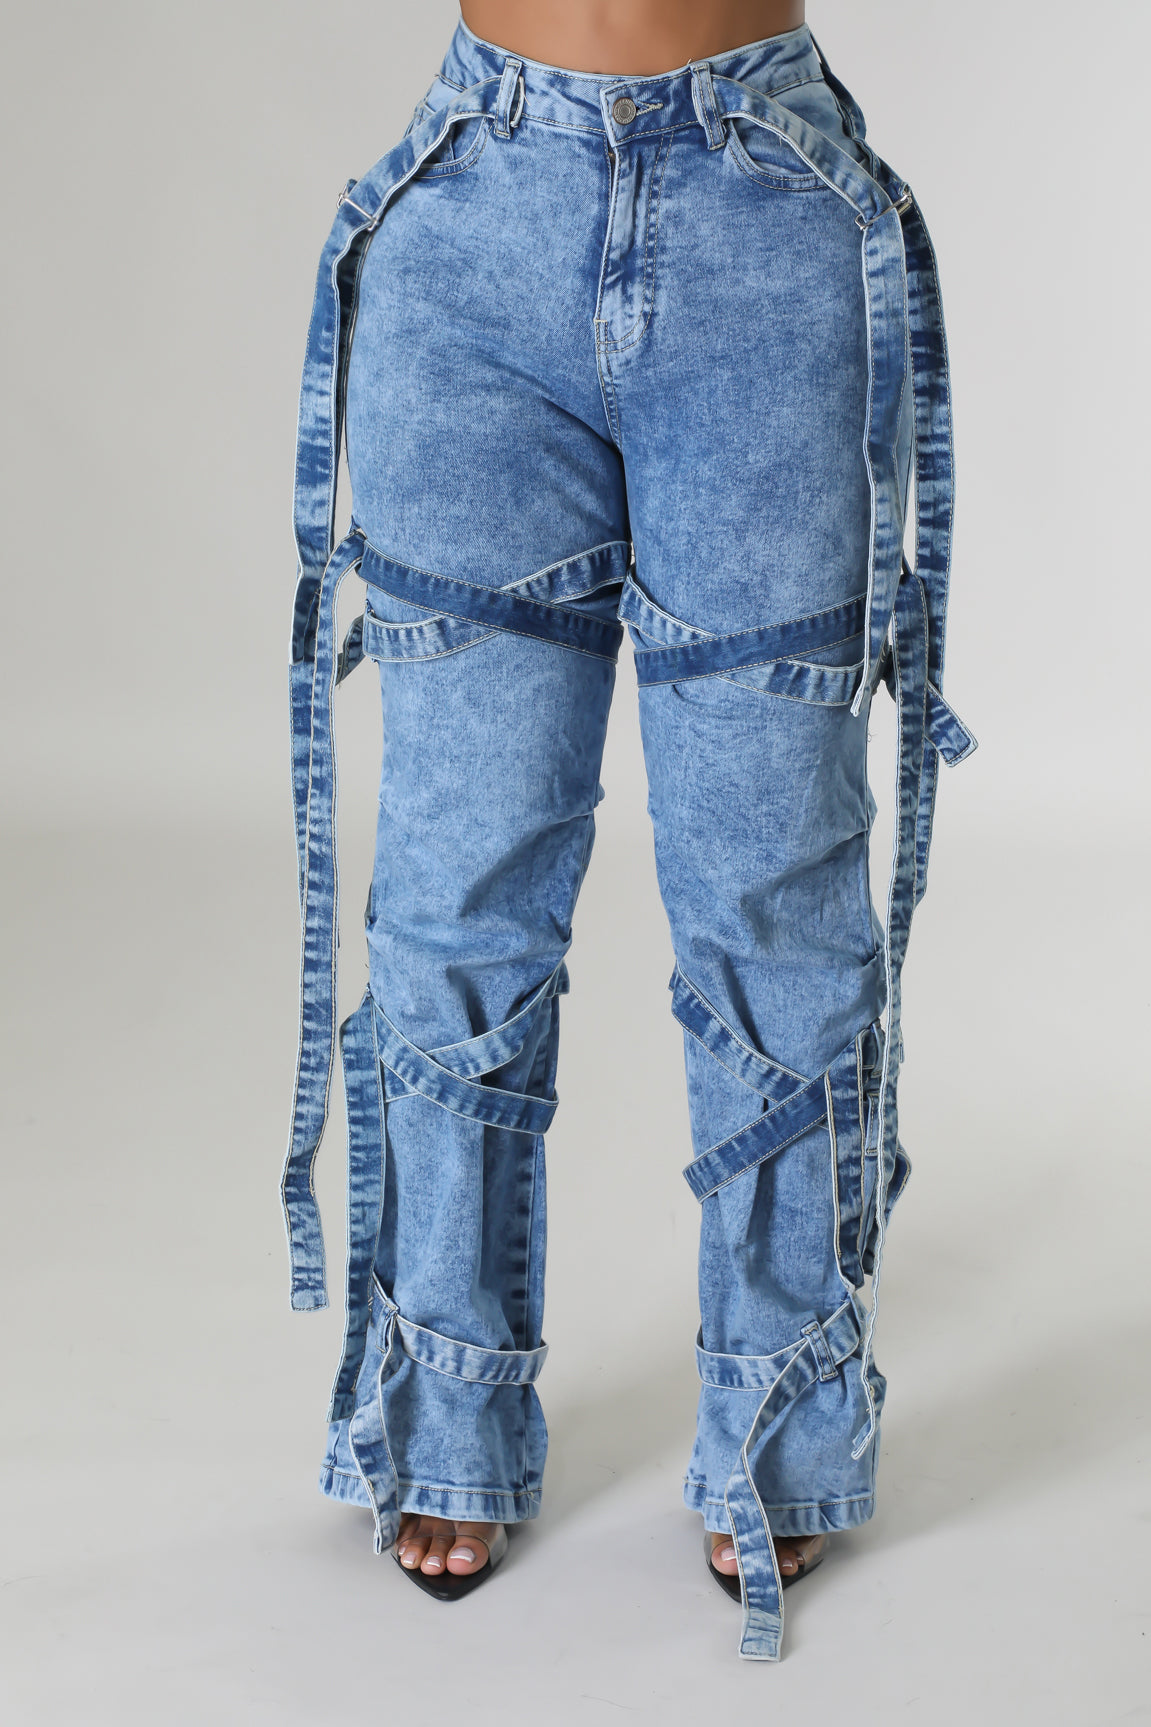 Acacia Babe Jeans